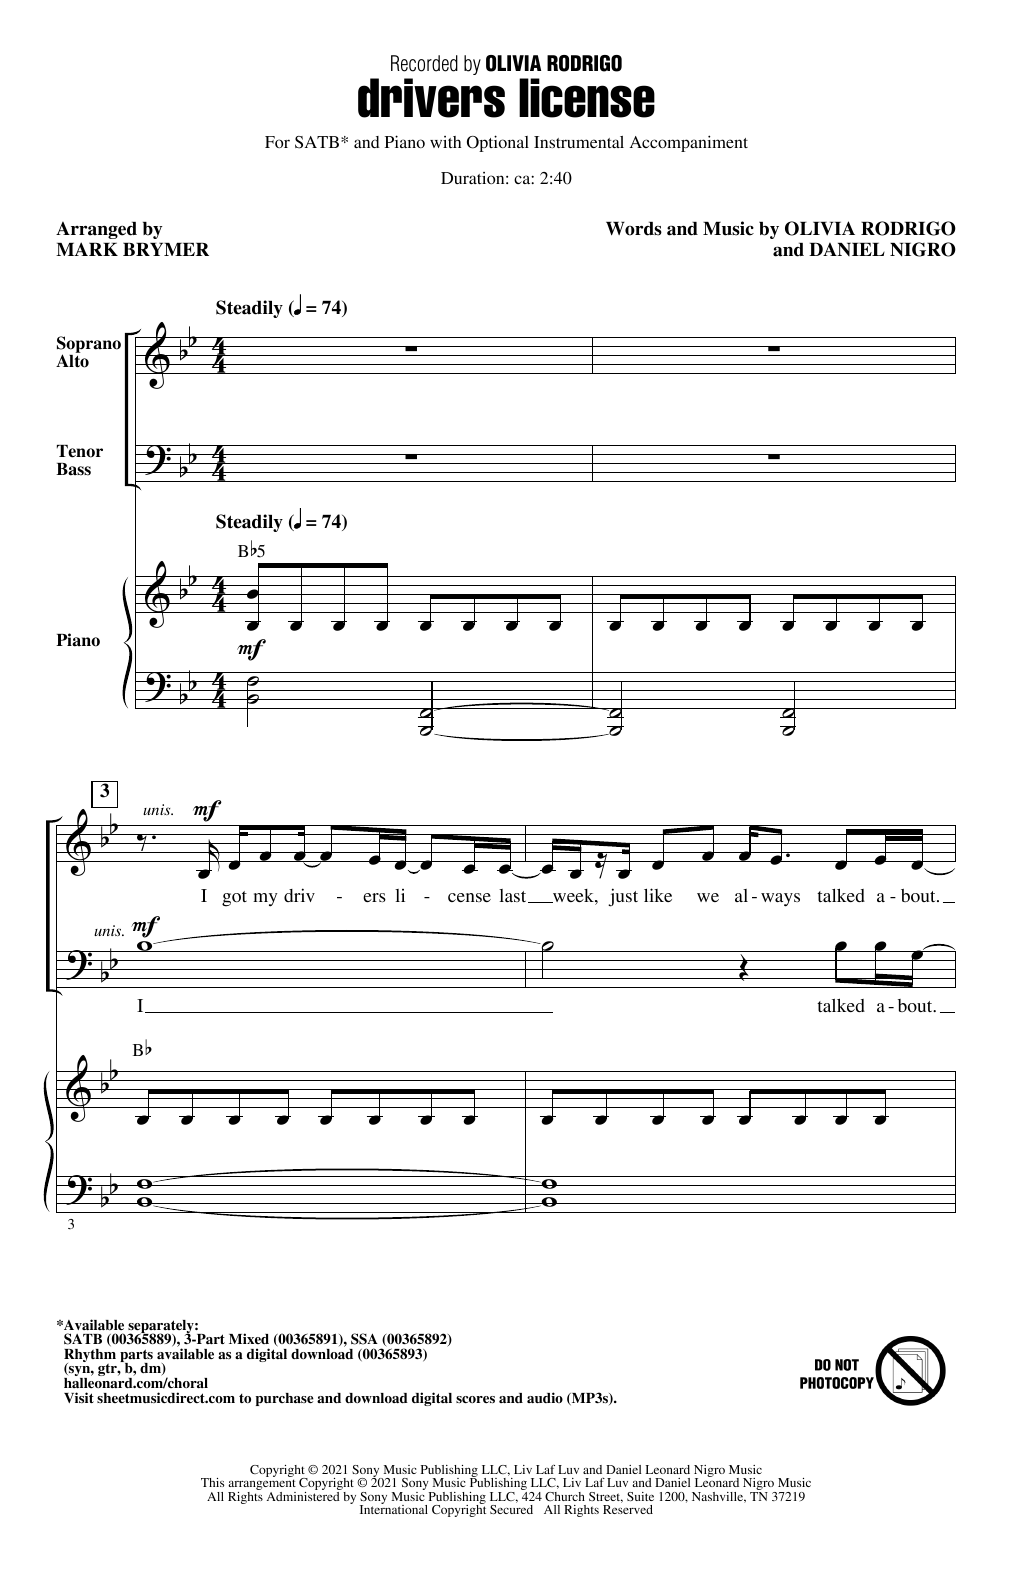 Olivia Rodrigo drivers license (arr. Mark Brymer) Sheet Music Notes & Chords for SATB Choir - Download or Print PDF